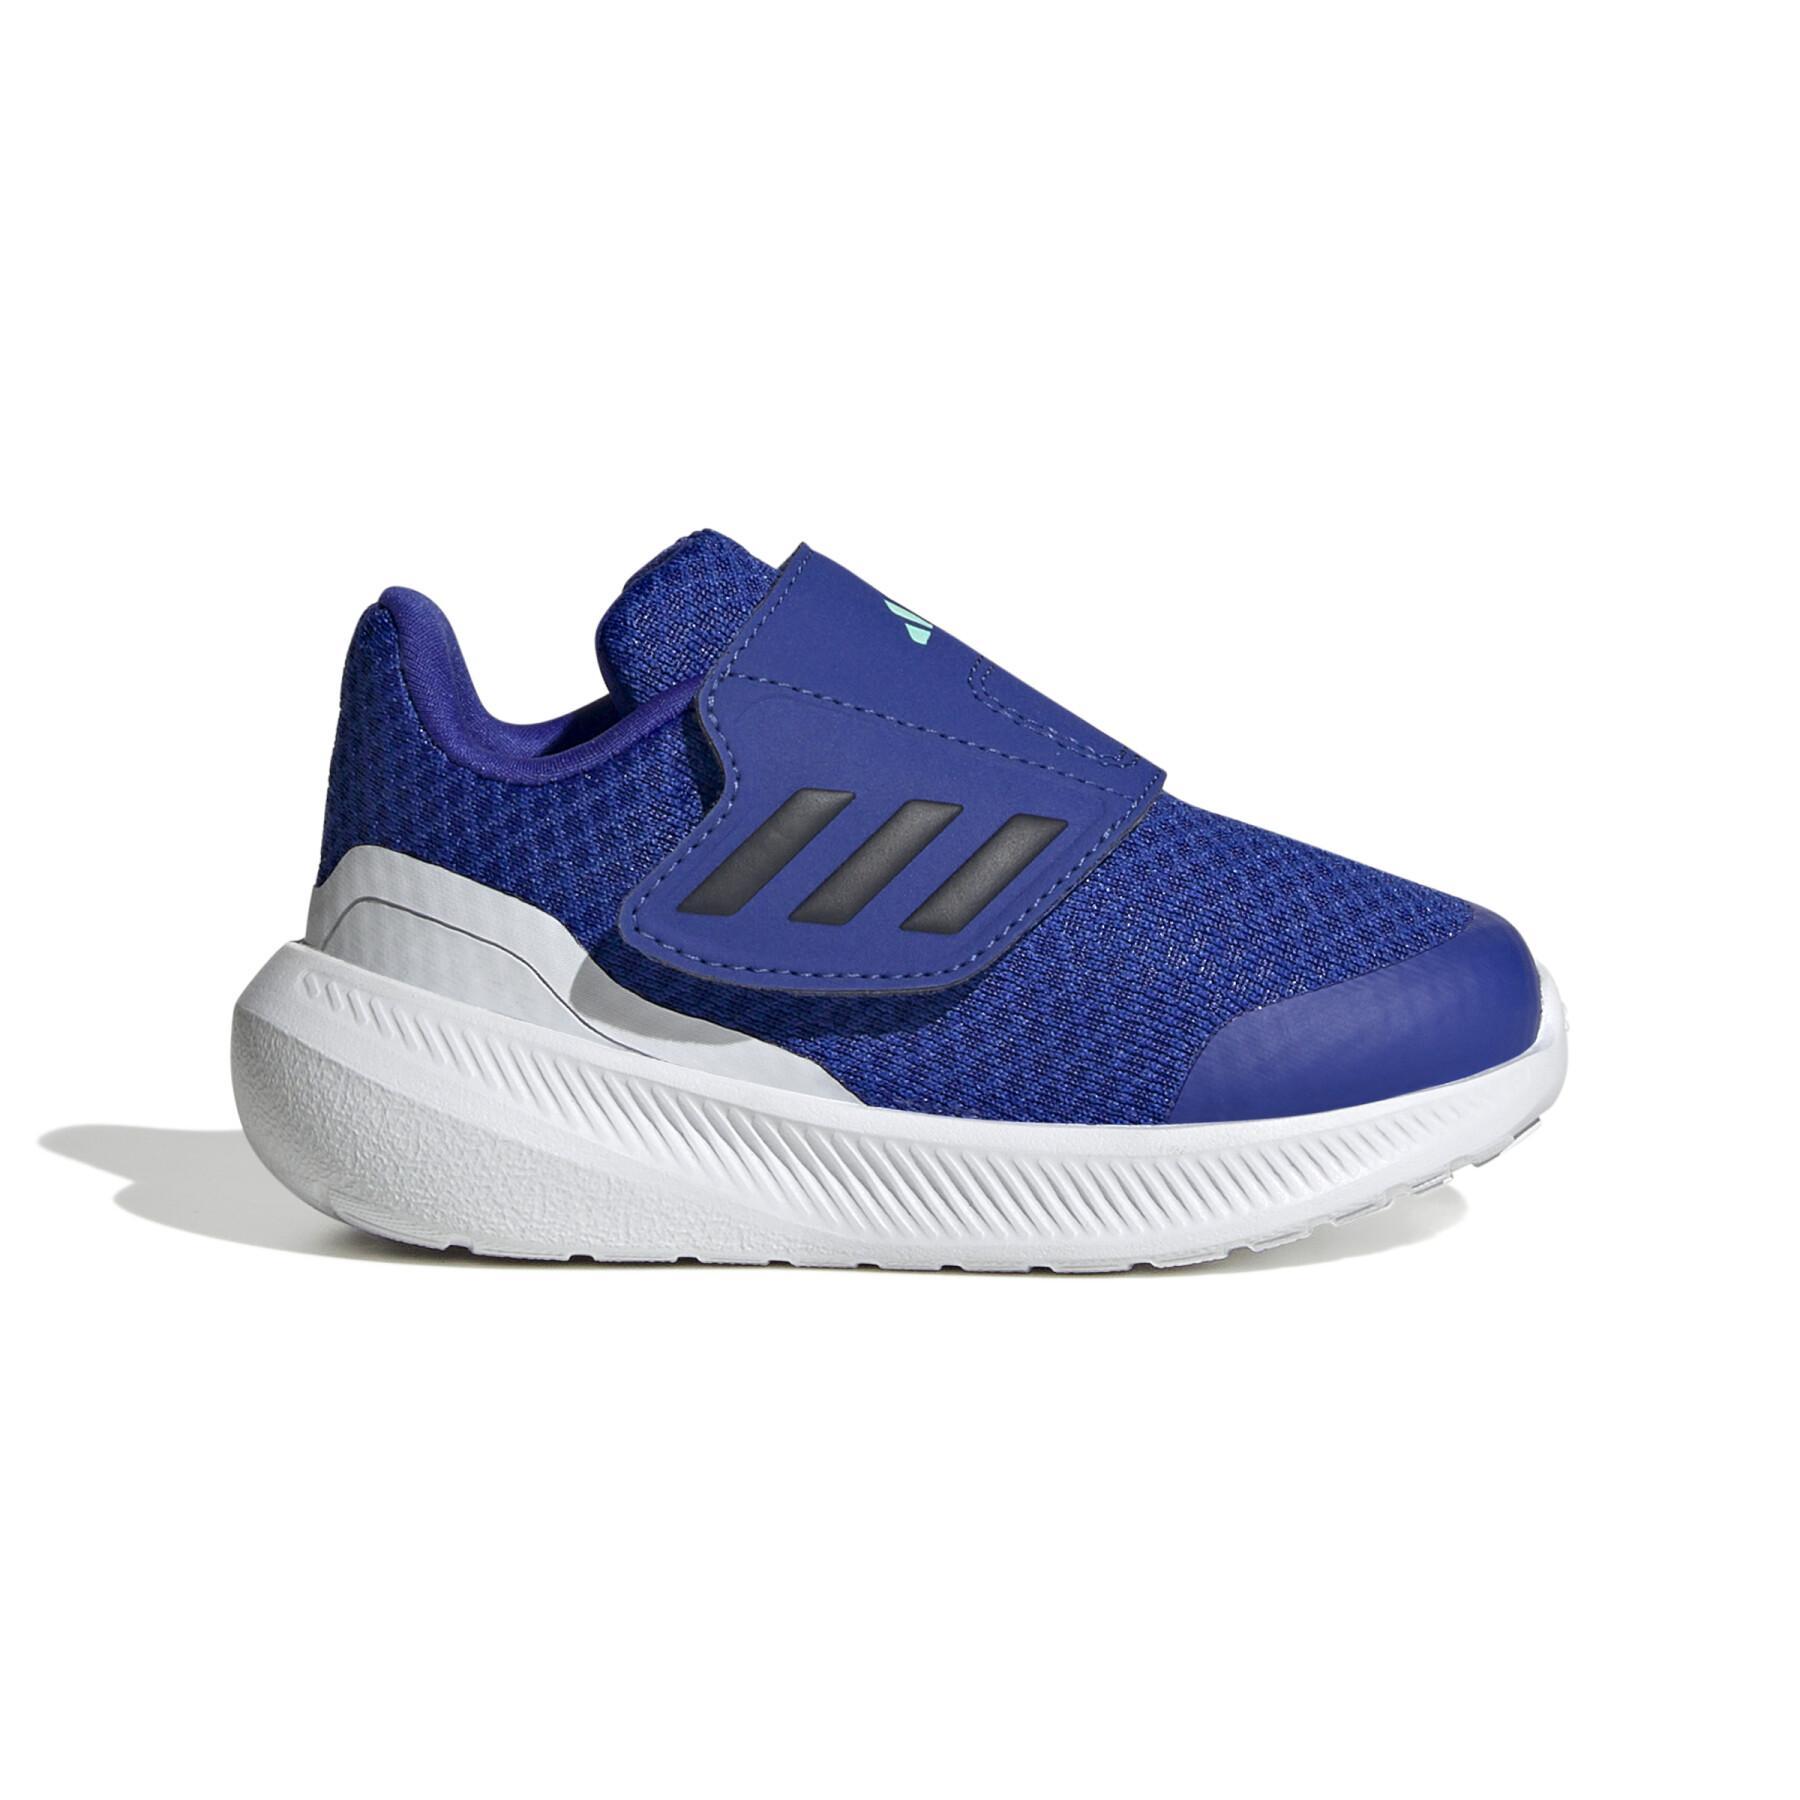  running buty dla dziewczynki adidas Runfalcon 3.0